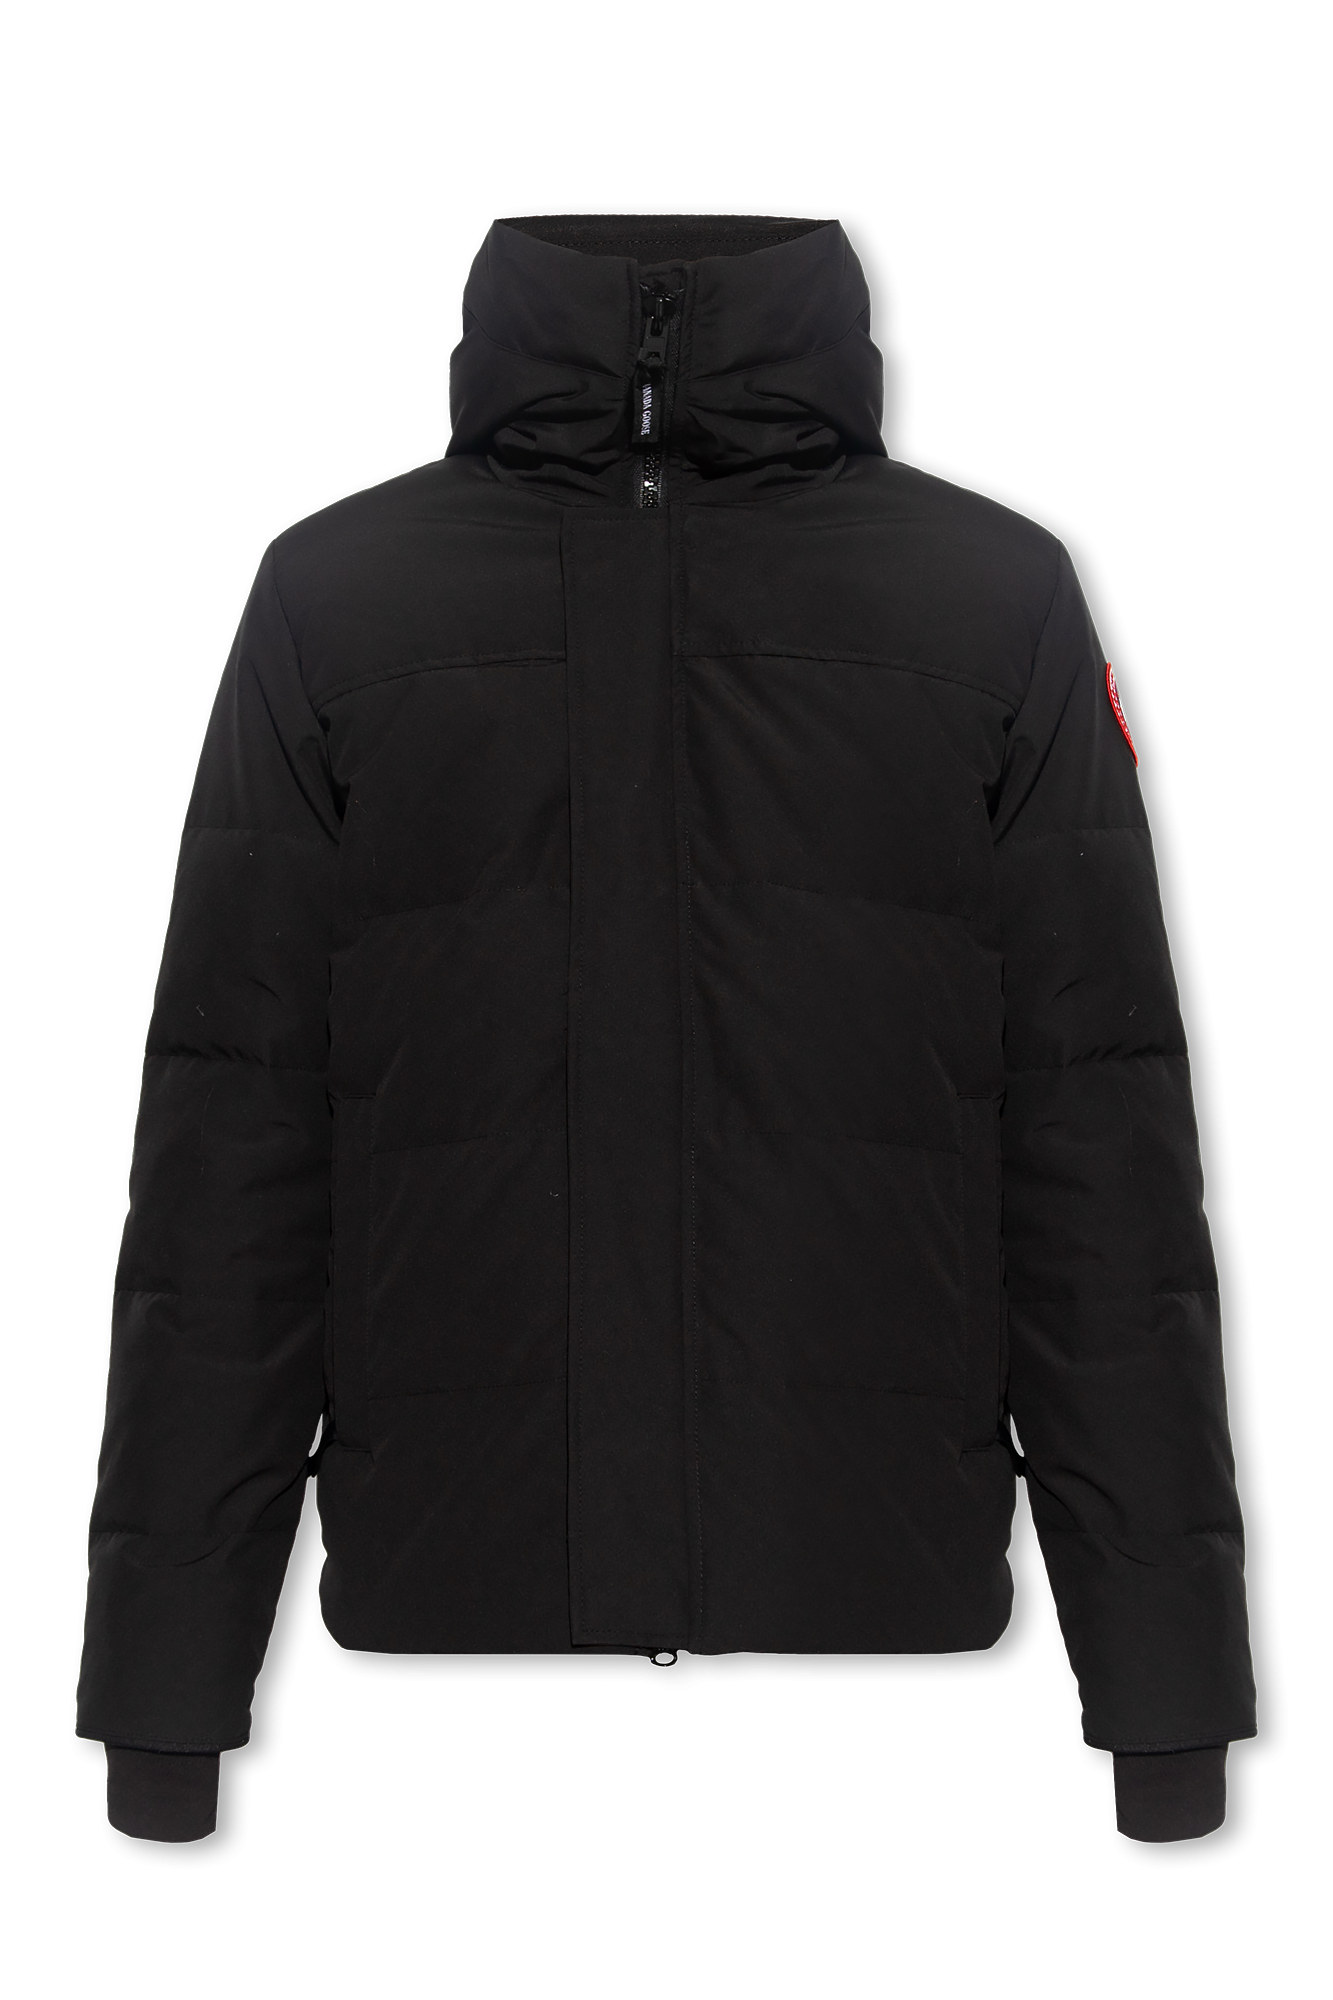 Black 'MacMillan' down jacket Canada Goose - Vitkac Canada